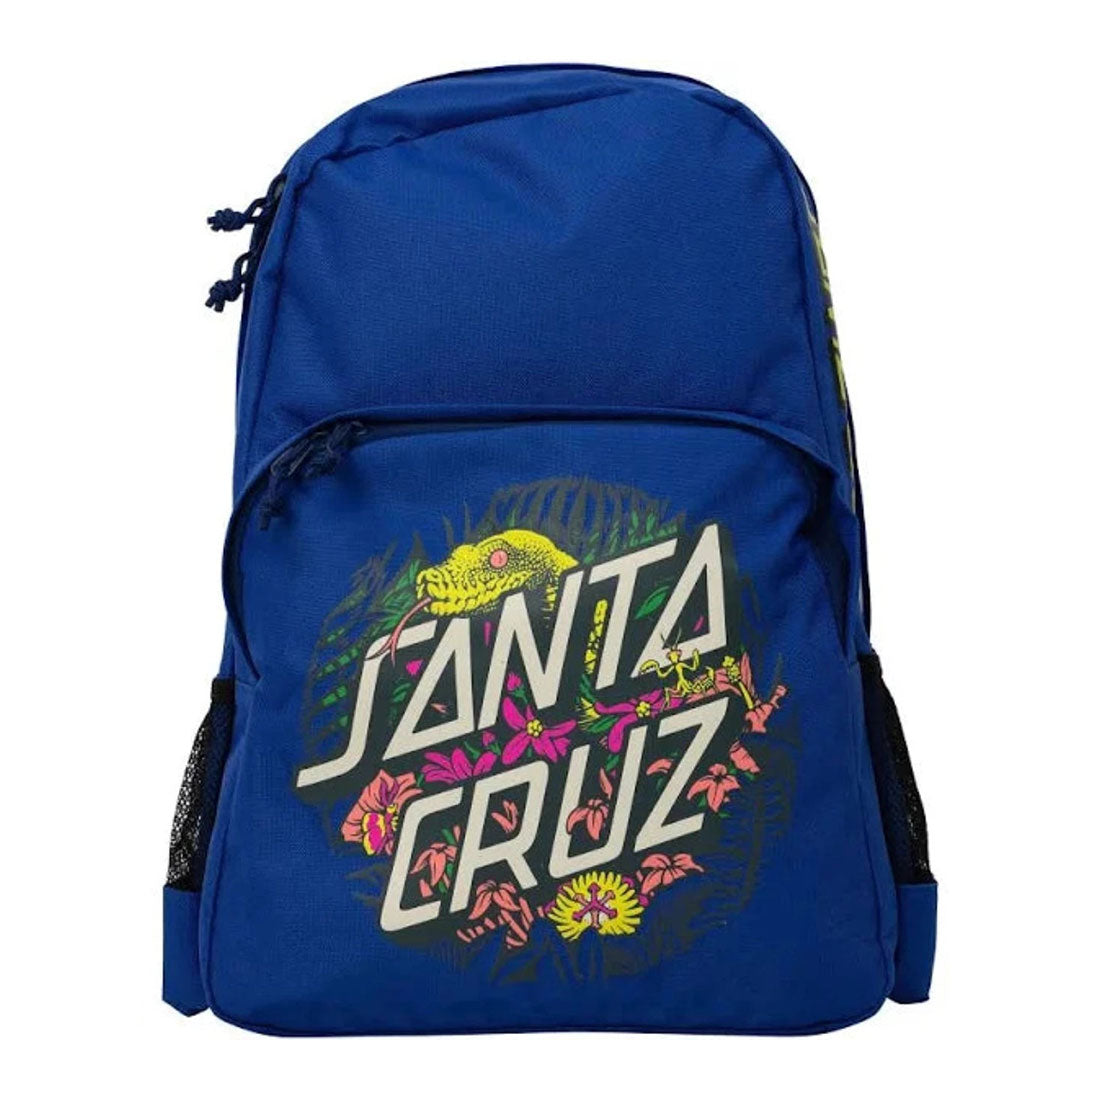 Santa Cruz Asp Flores Dot Backpack - Blue Bags and Backpacks